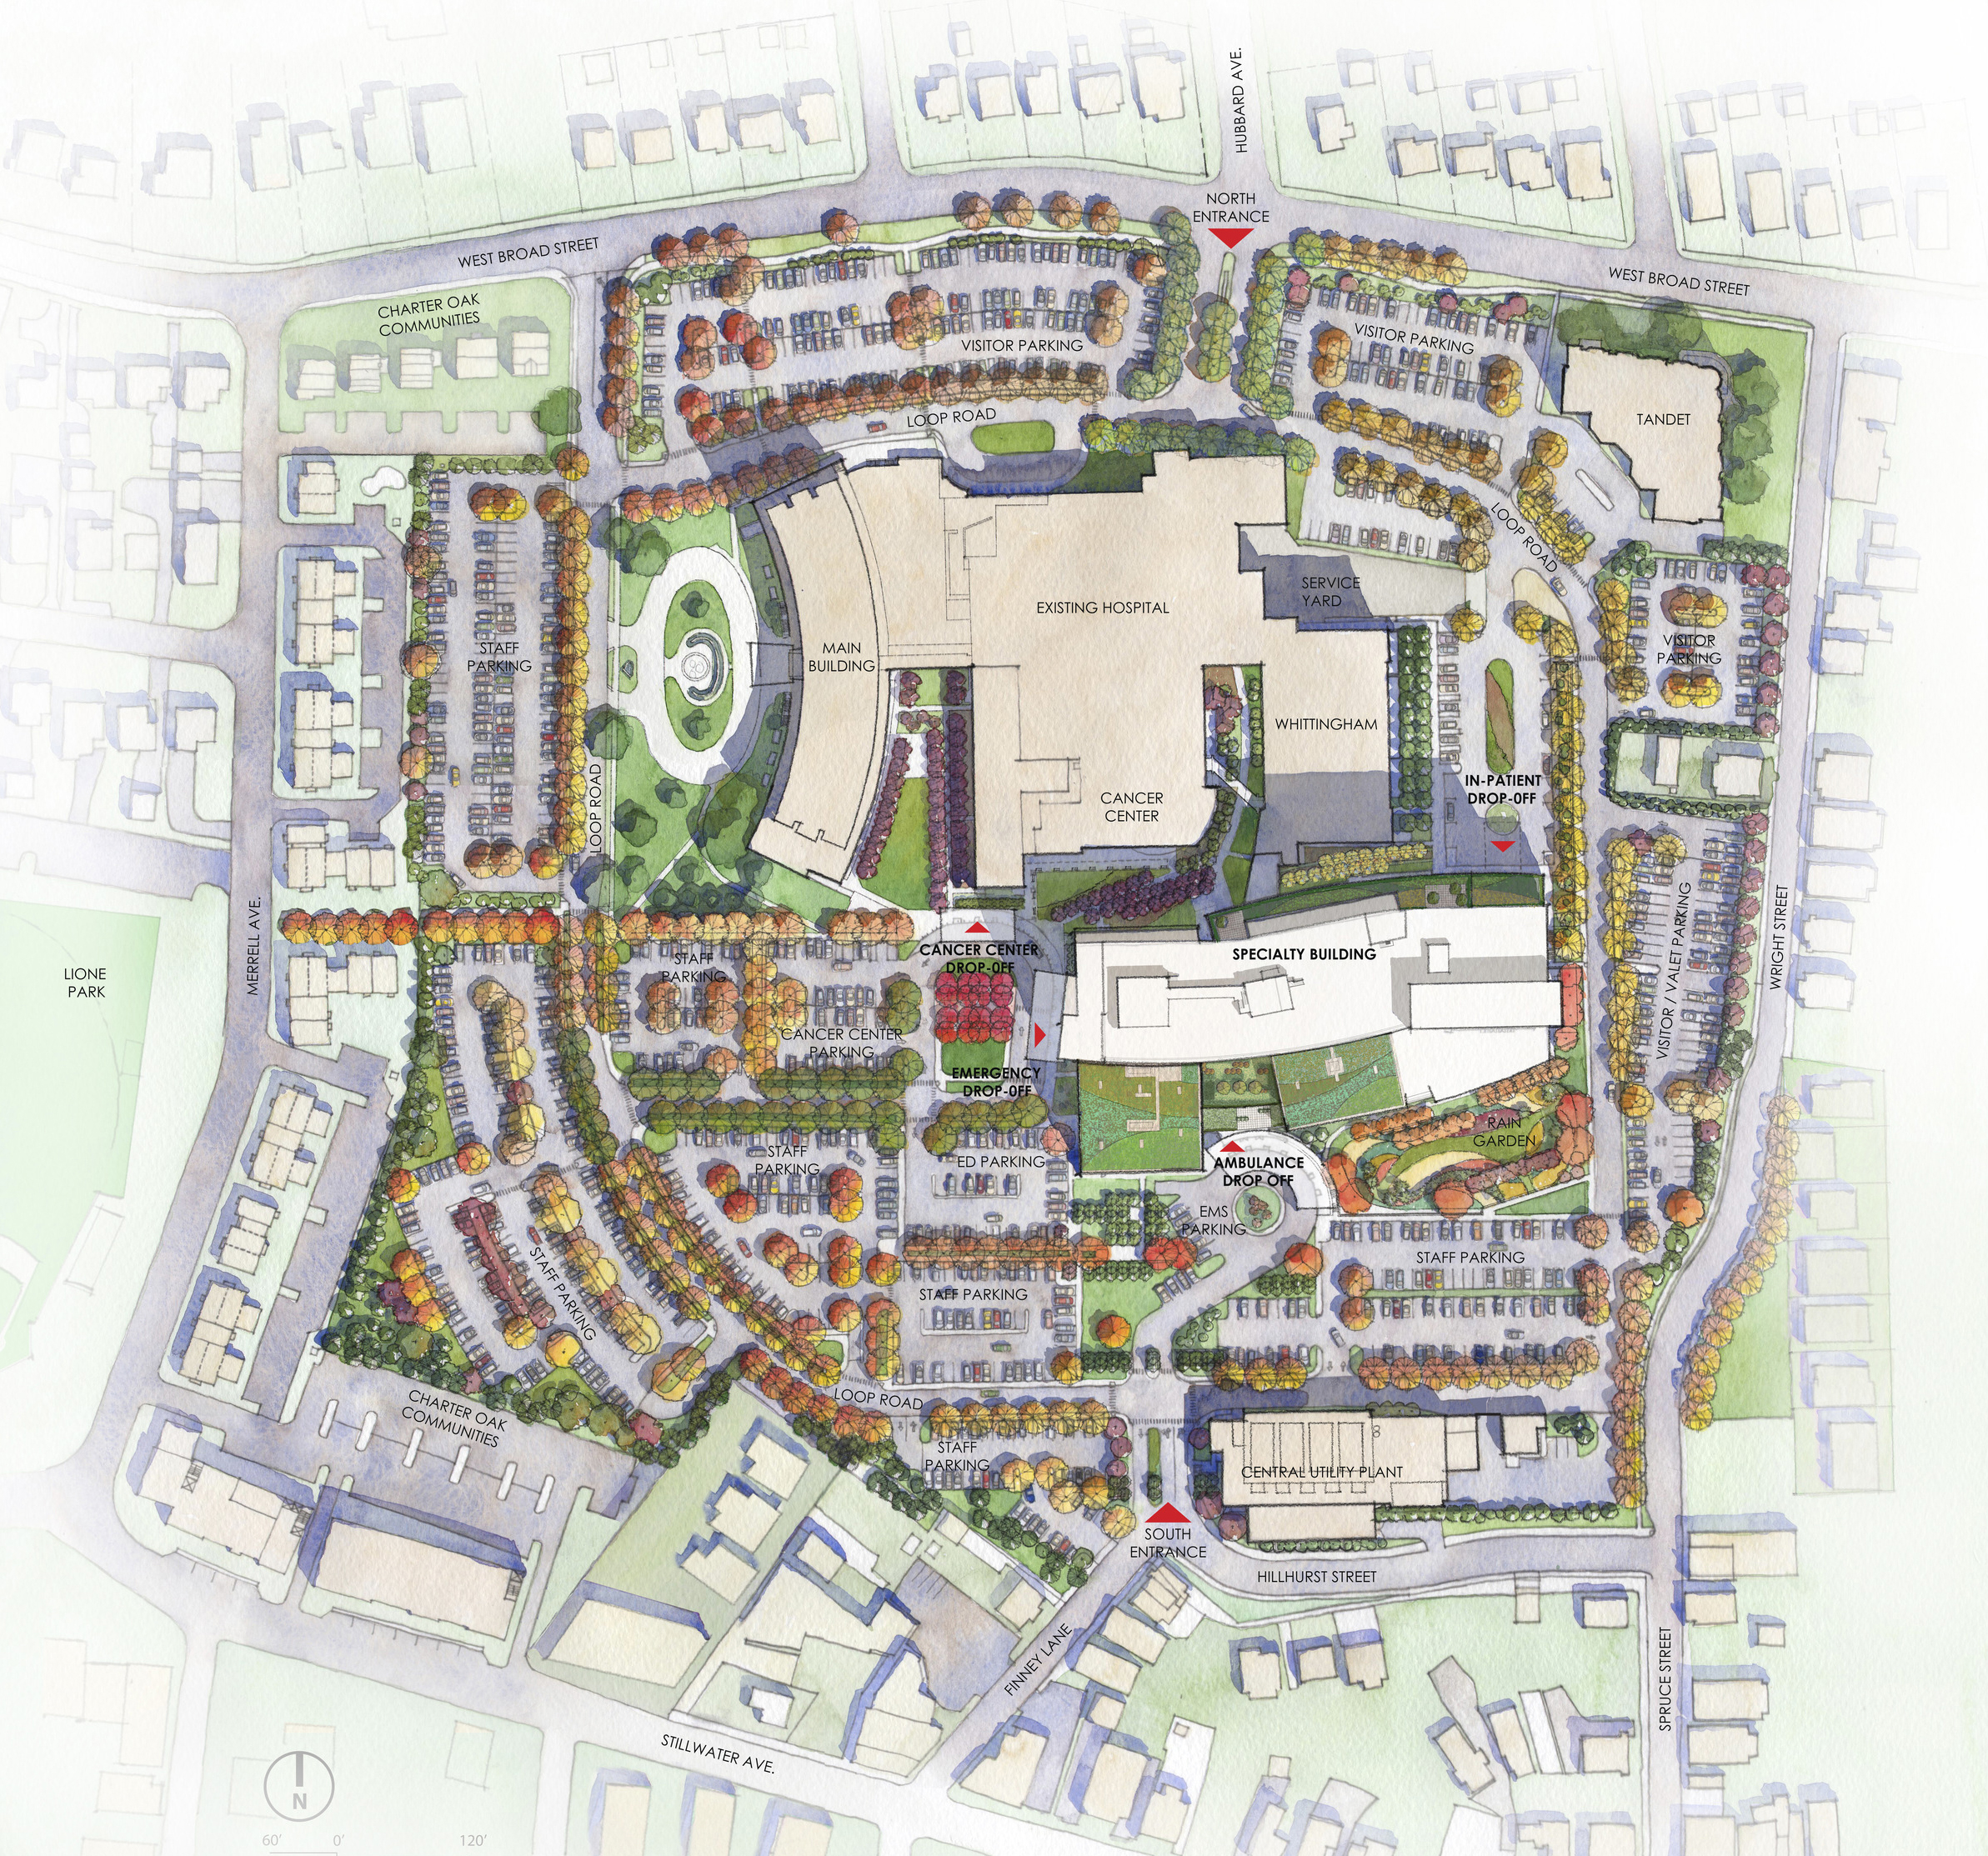 Stamford Hospital site plan